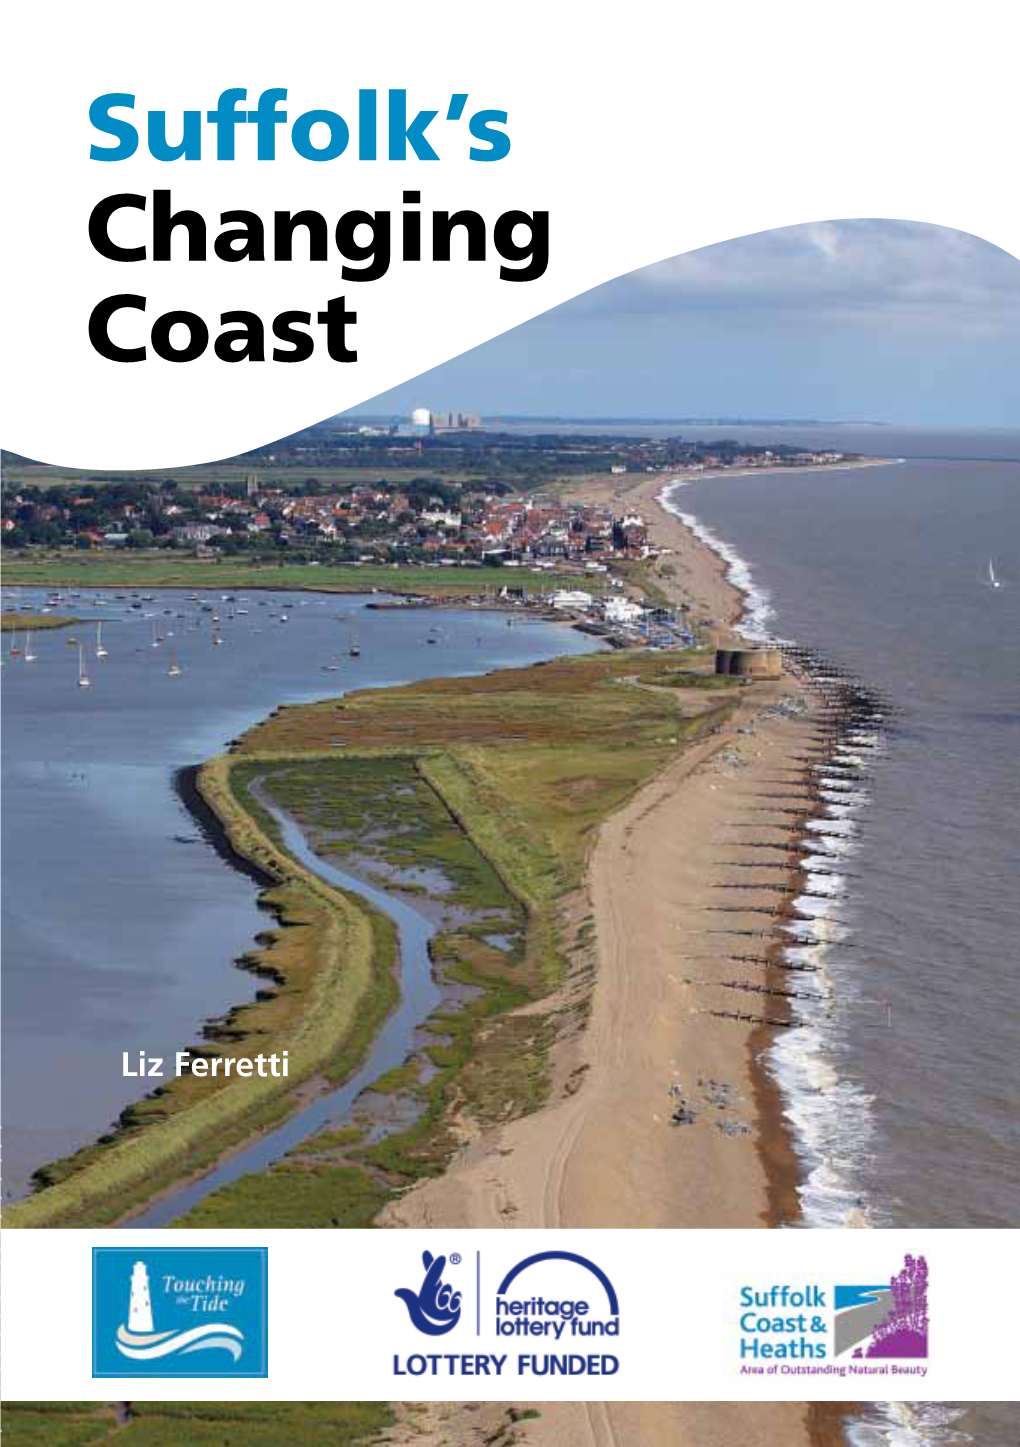 Suffolk's Changing Coast